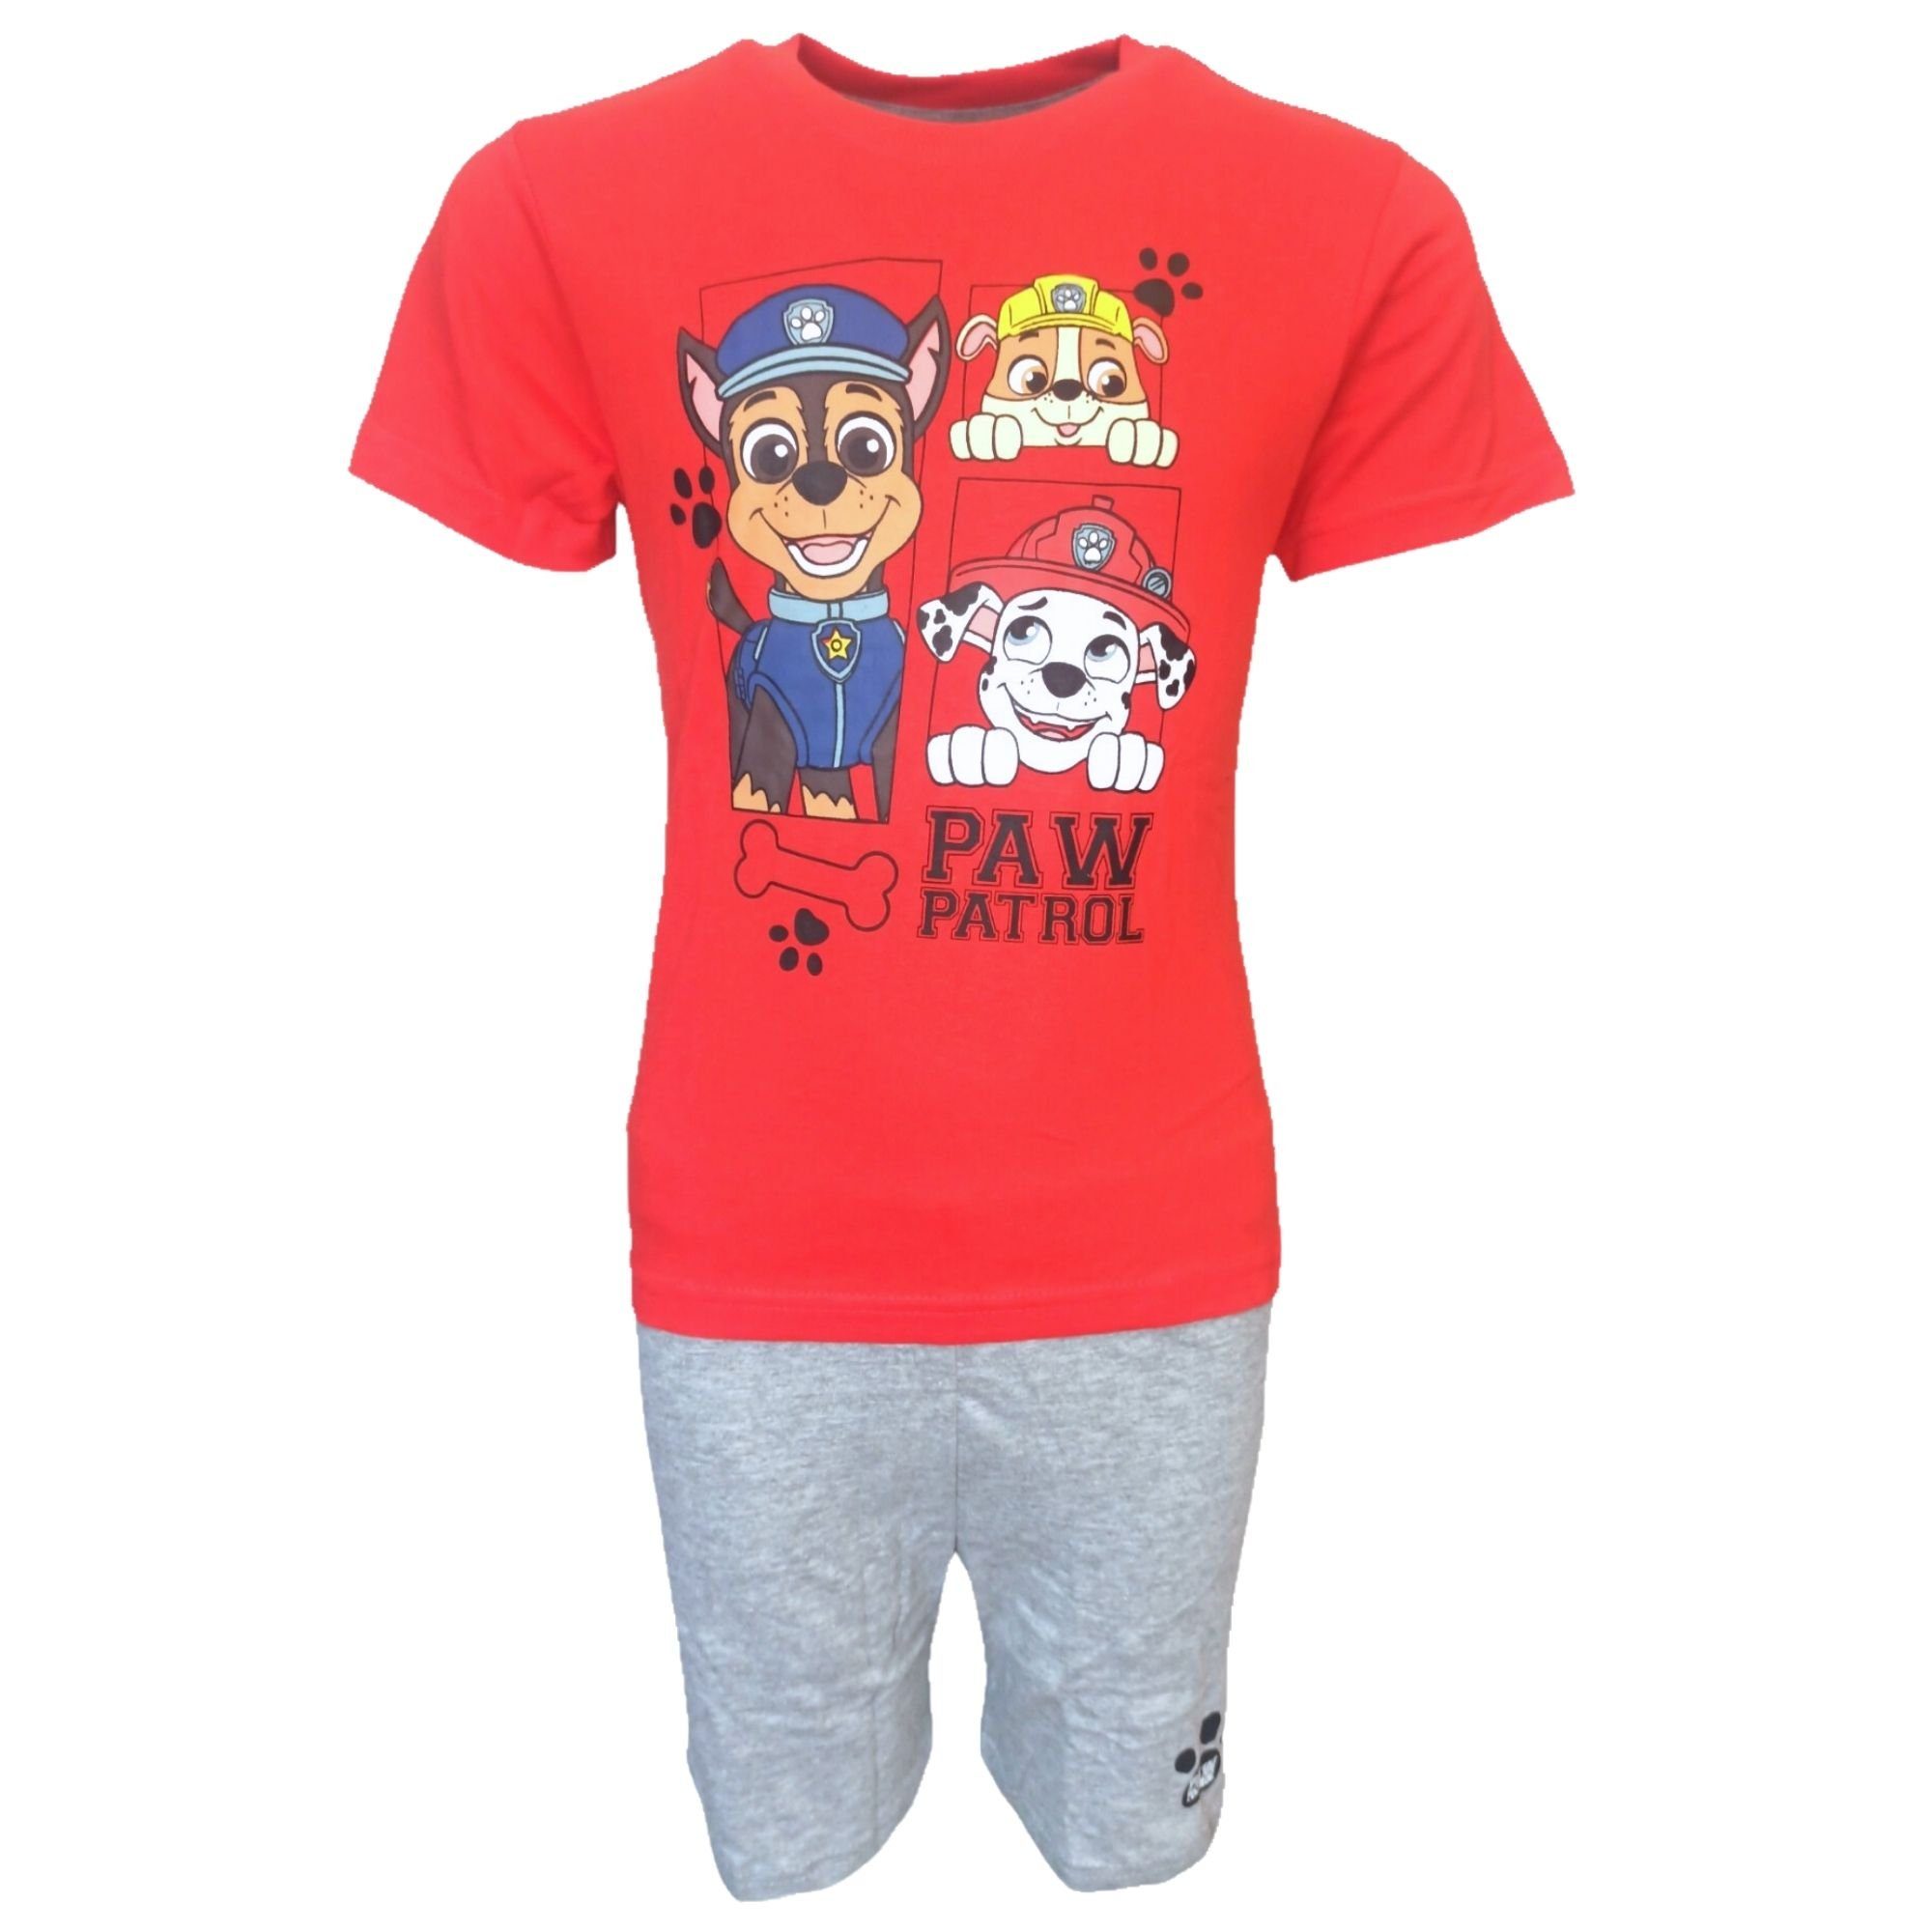 PAW PATROL tlg) - (2 Pyjama 98-128 Jungen cm Gr. Set Schlafanzug Shorty